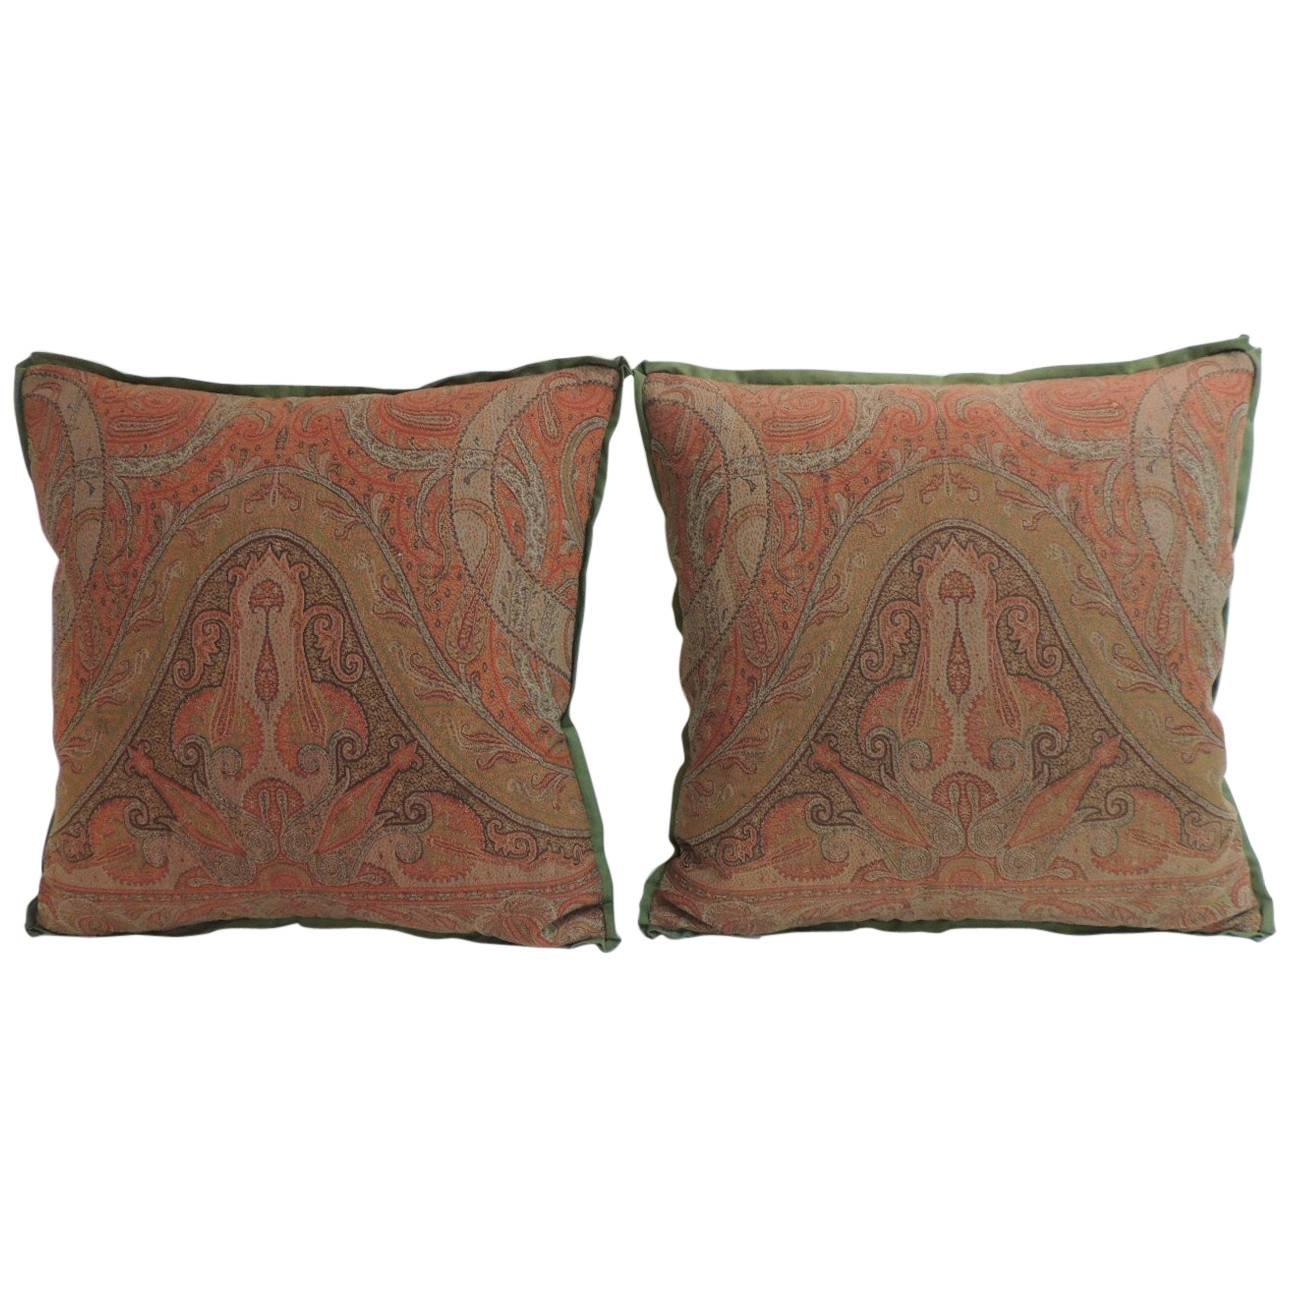 Pair of 19th Century Kashmir Woven Paisley Decorative Pillows